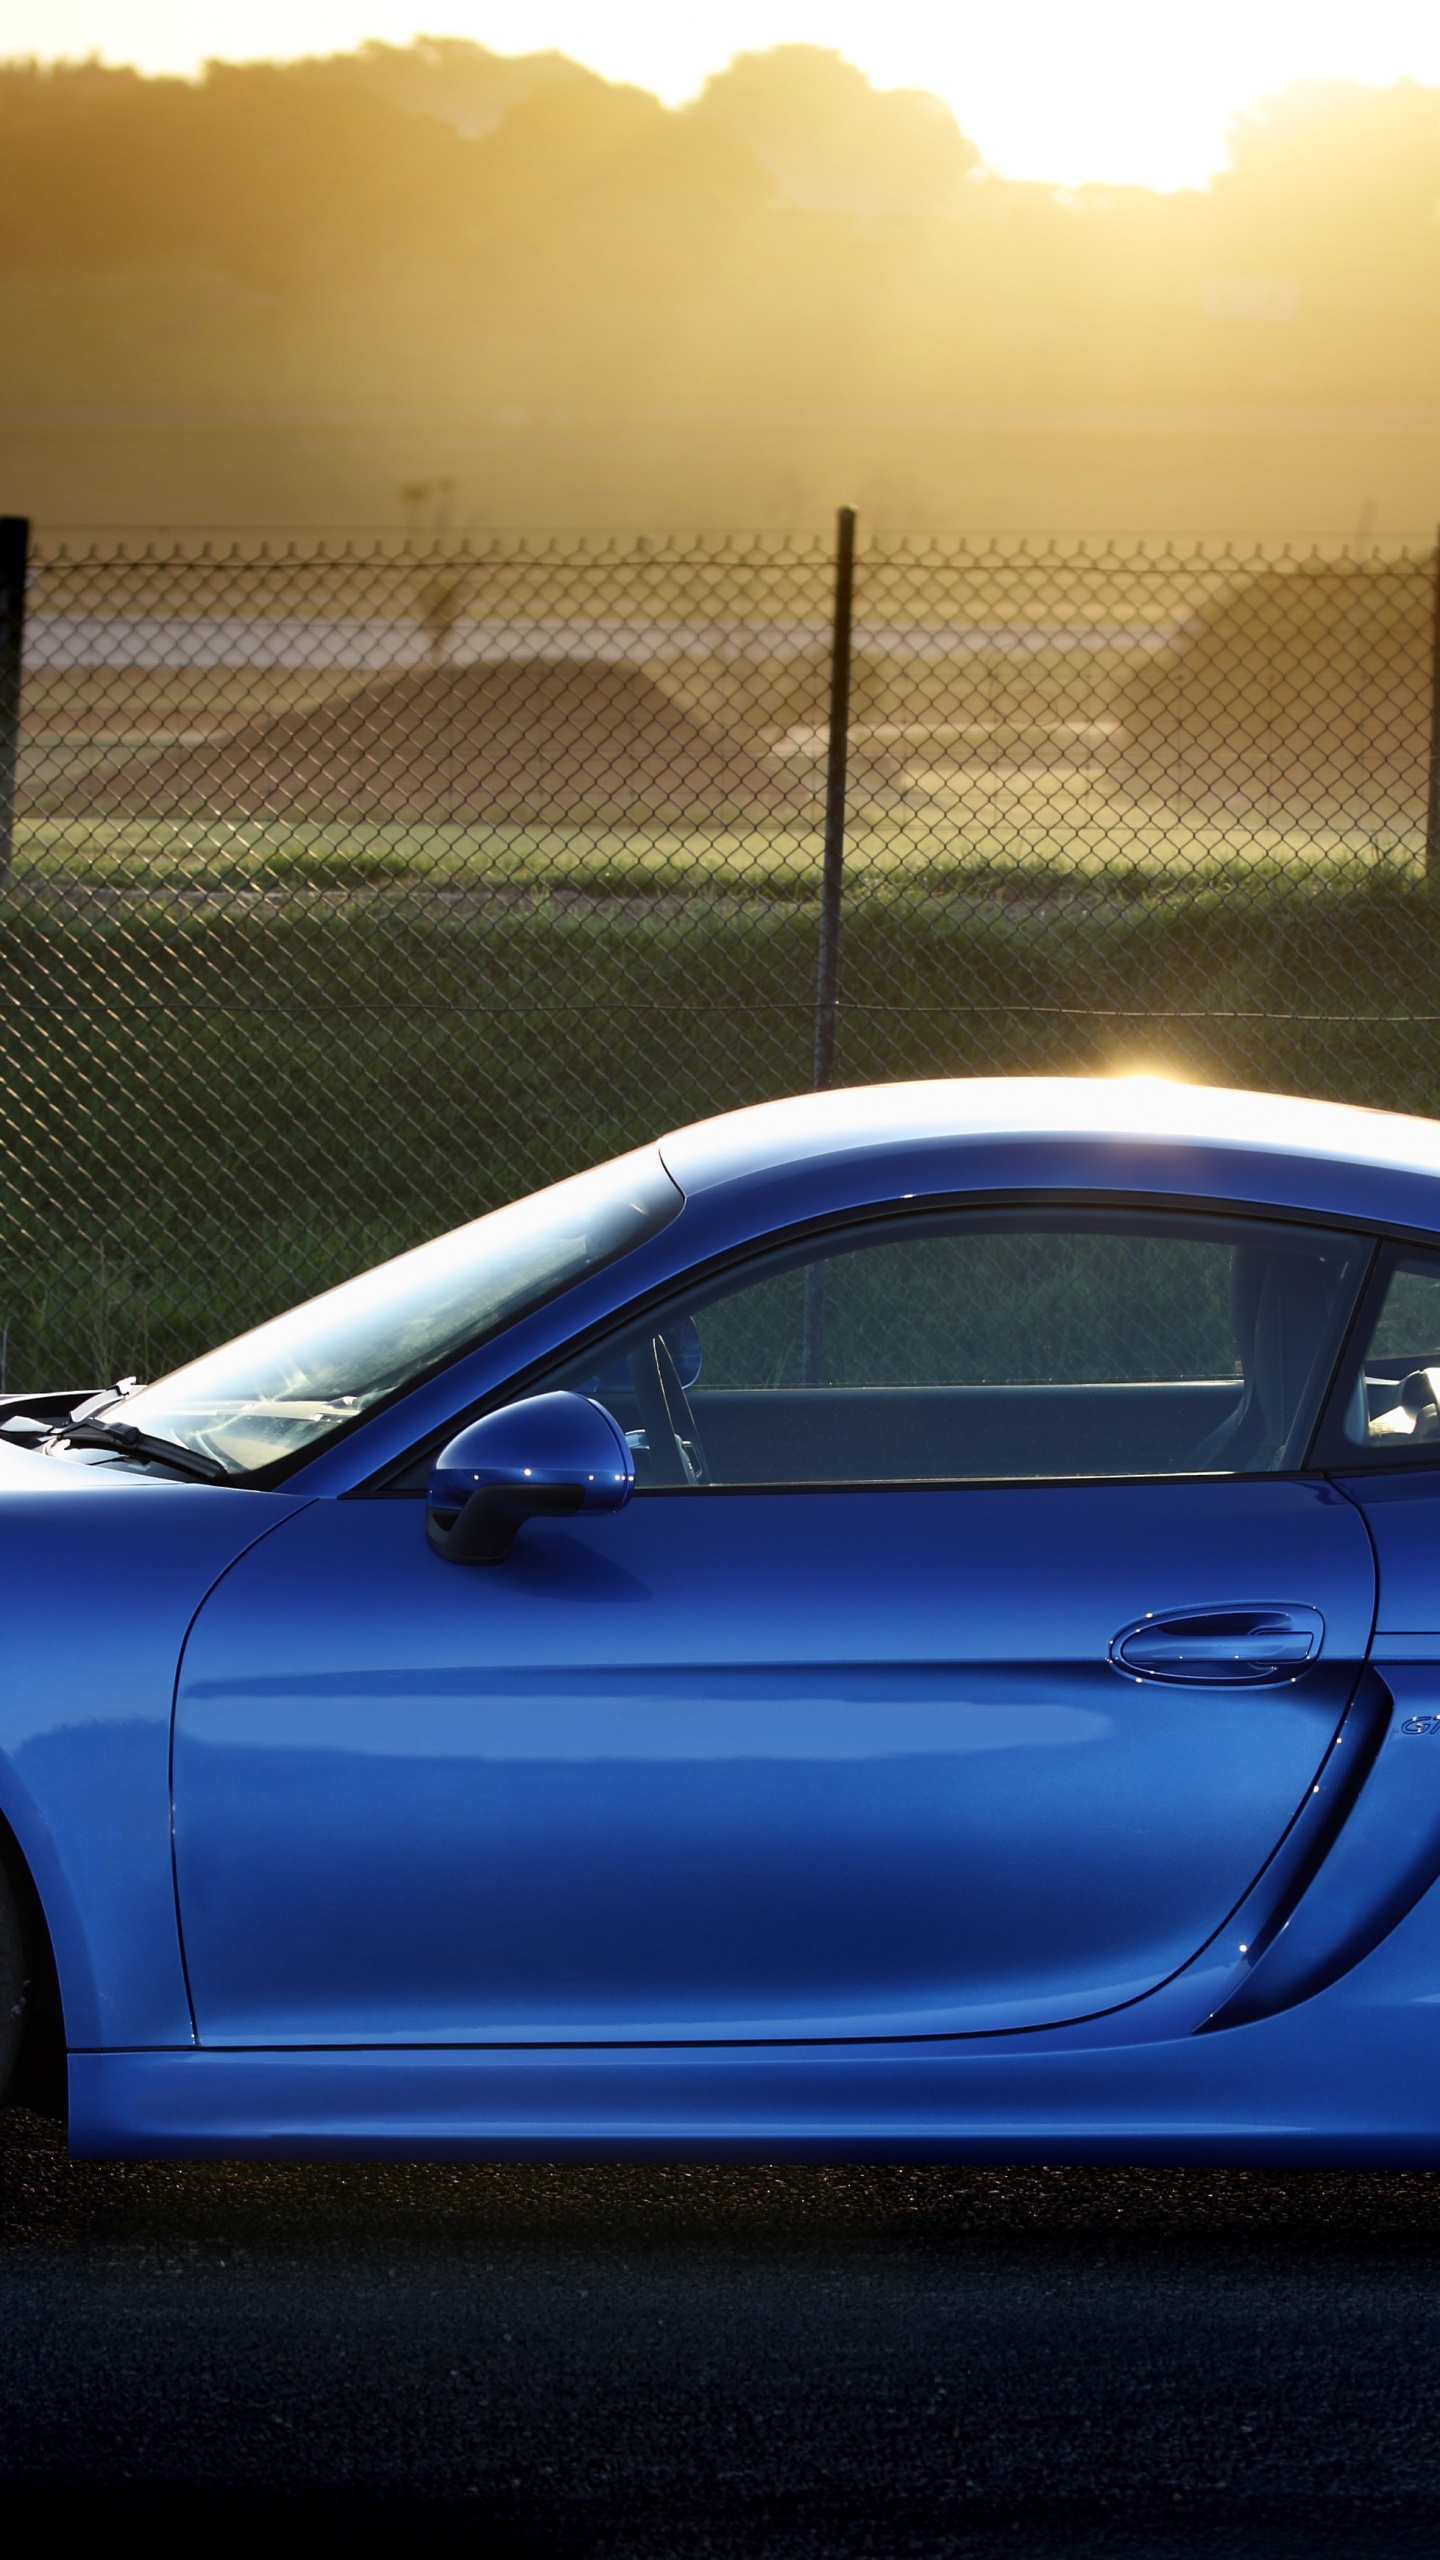 Blue Porsche 911 Parked Near Gray Metal Fence During Daytime. Wallpaper in 1440x2560 Resolution